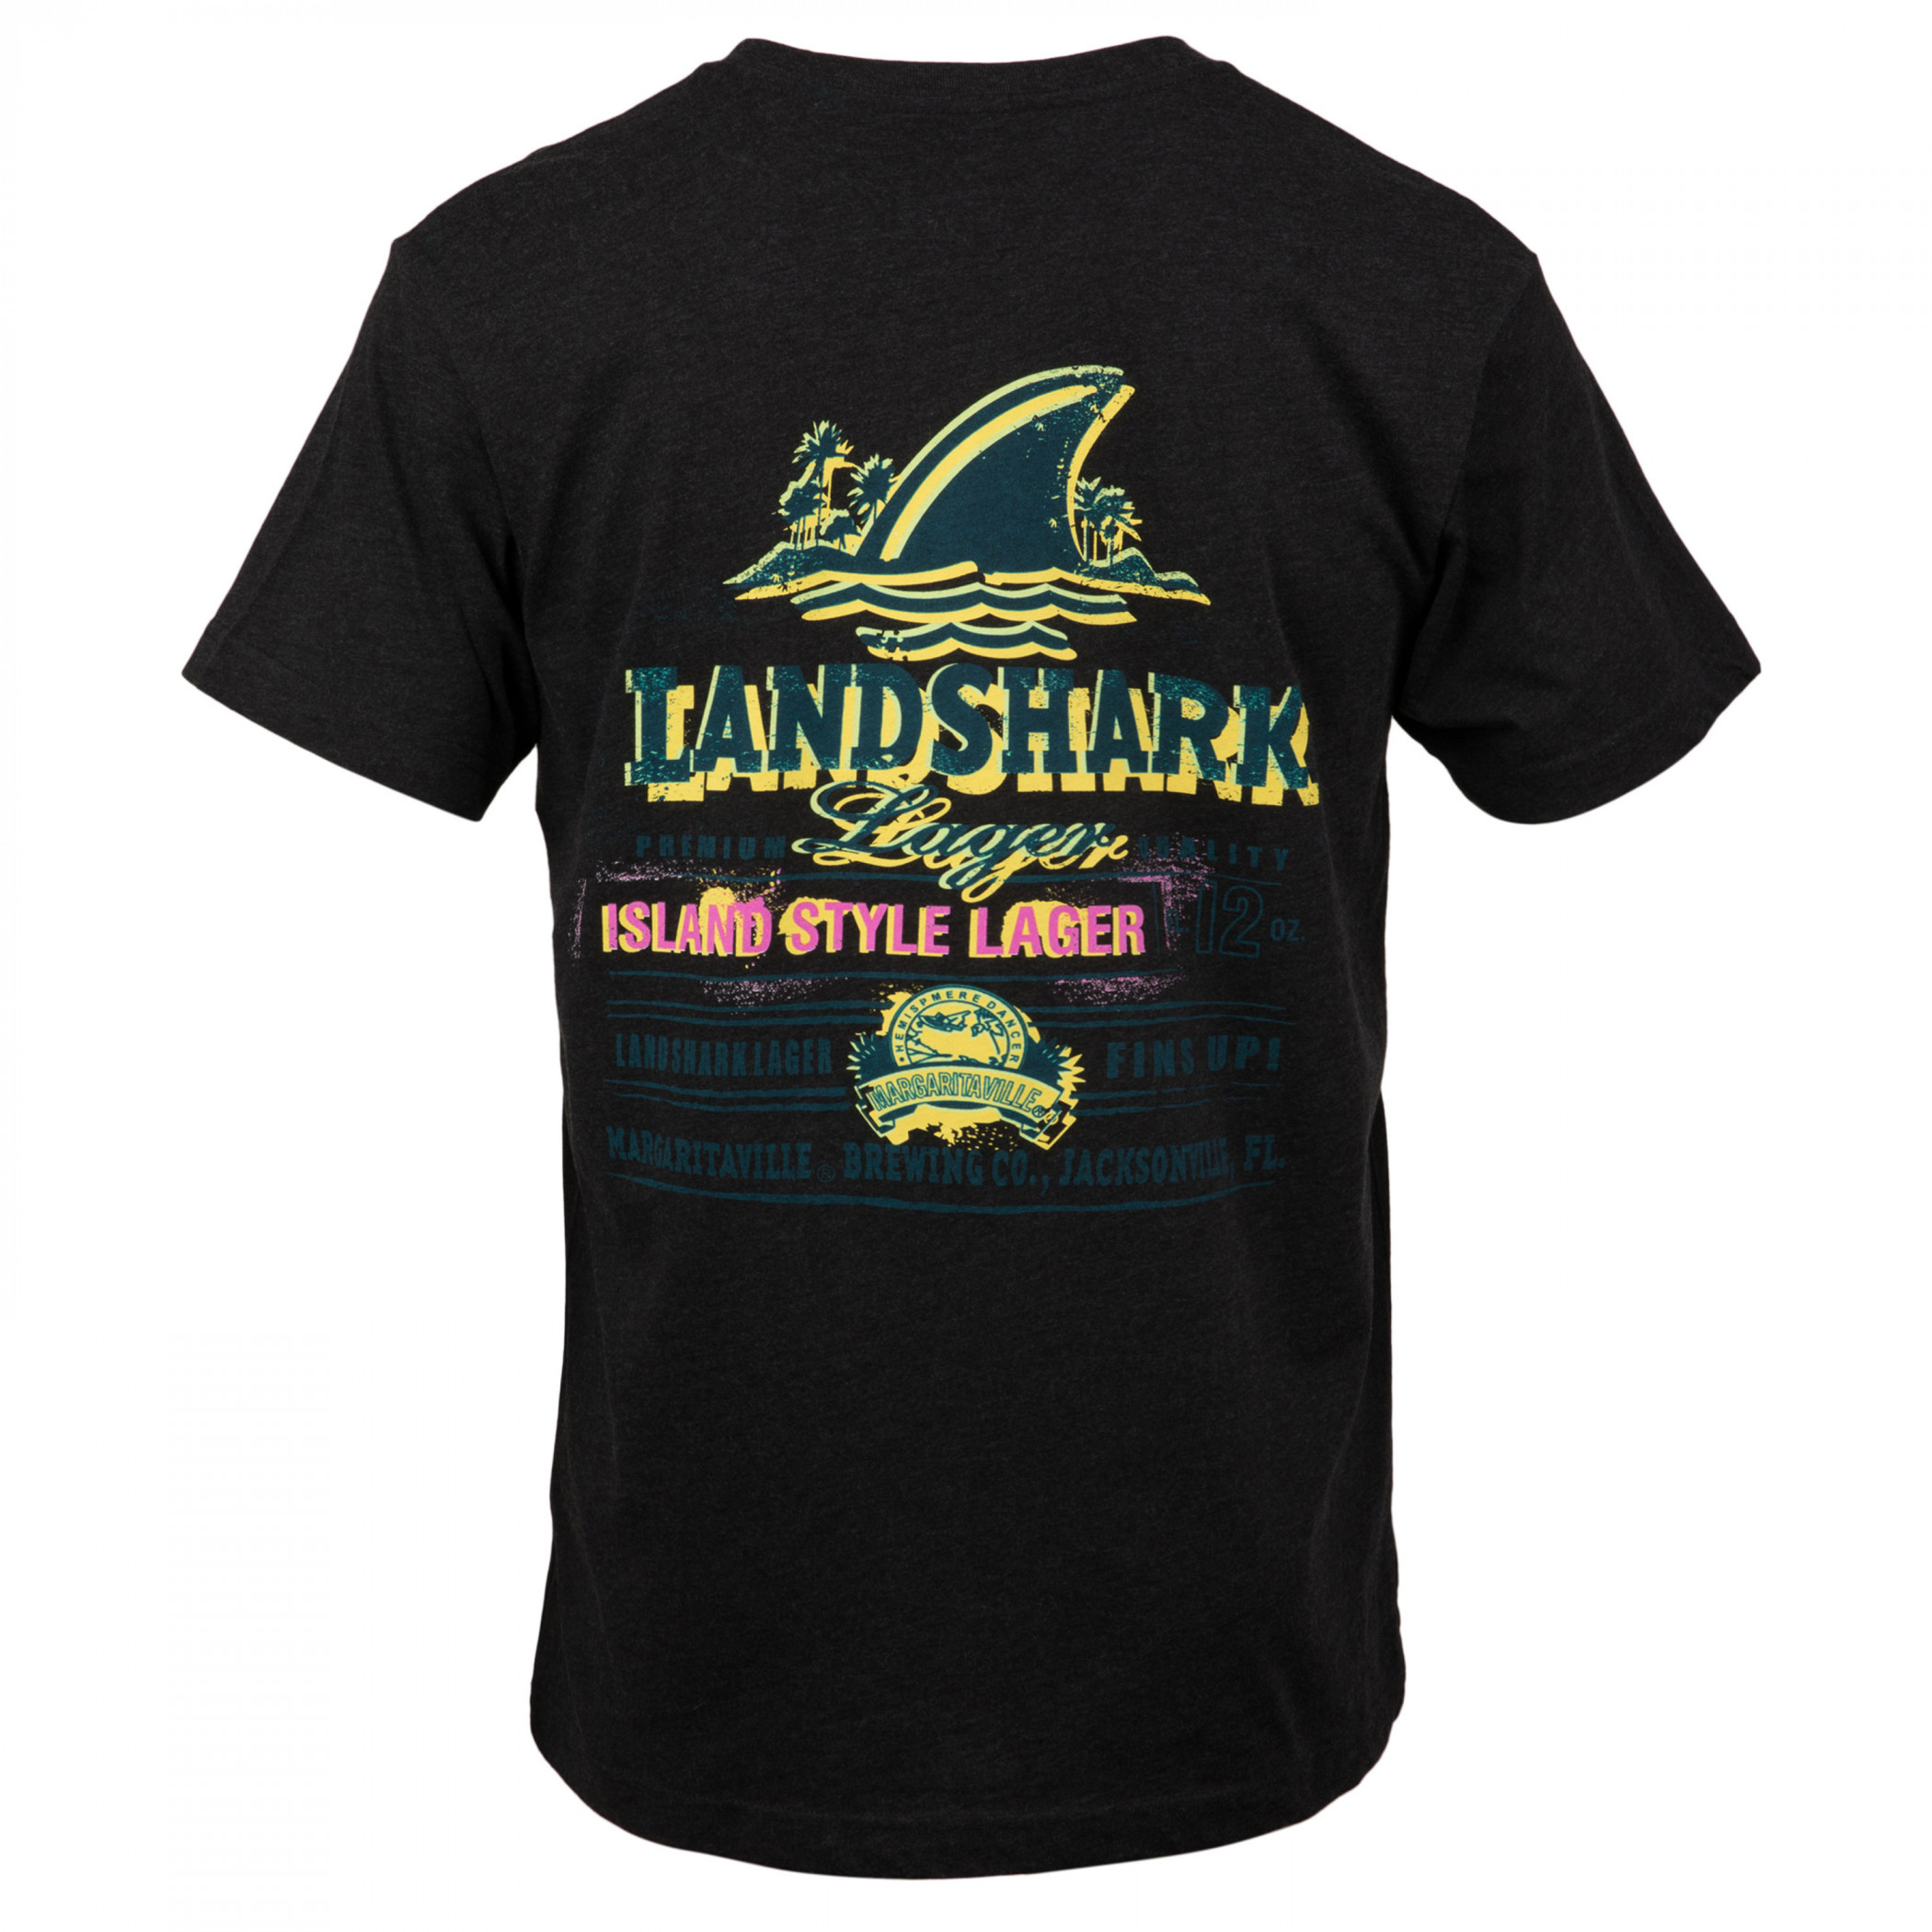 Landshark Painted Logo Black Tee Shirt